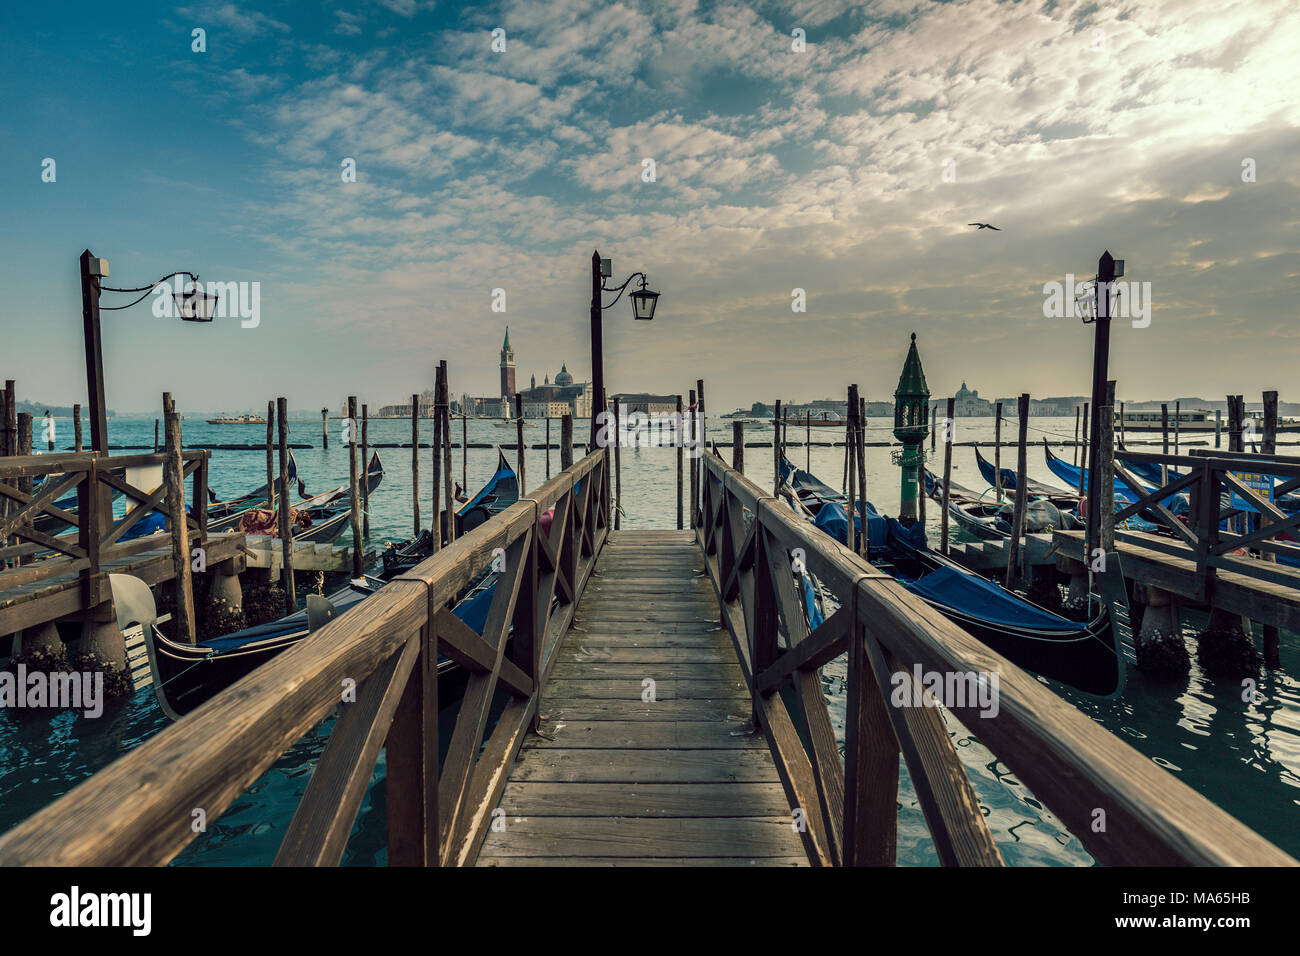 Venice (Italy) - Pier with gondolas on the Venice Lagoon Stock Photo